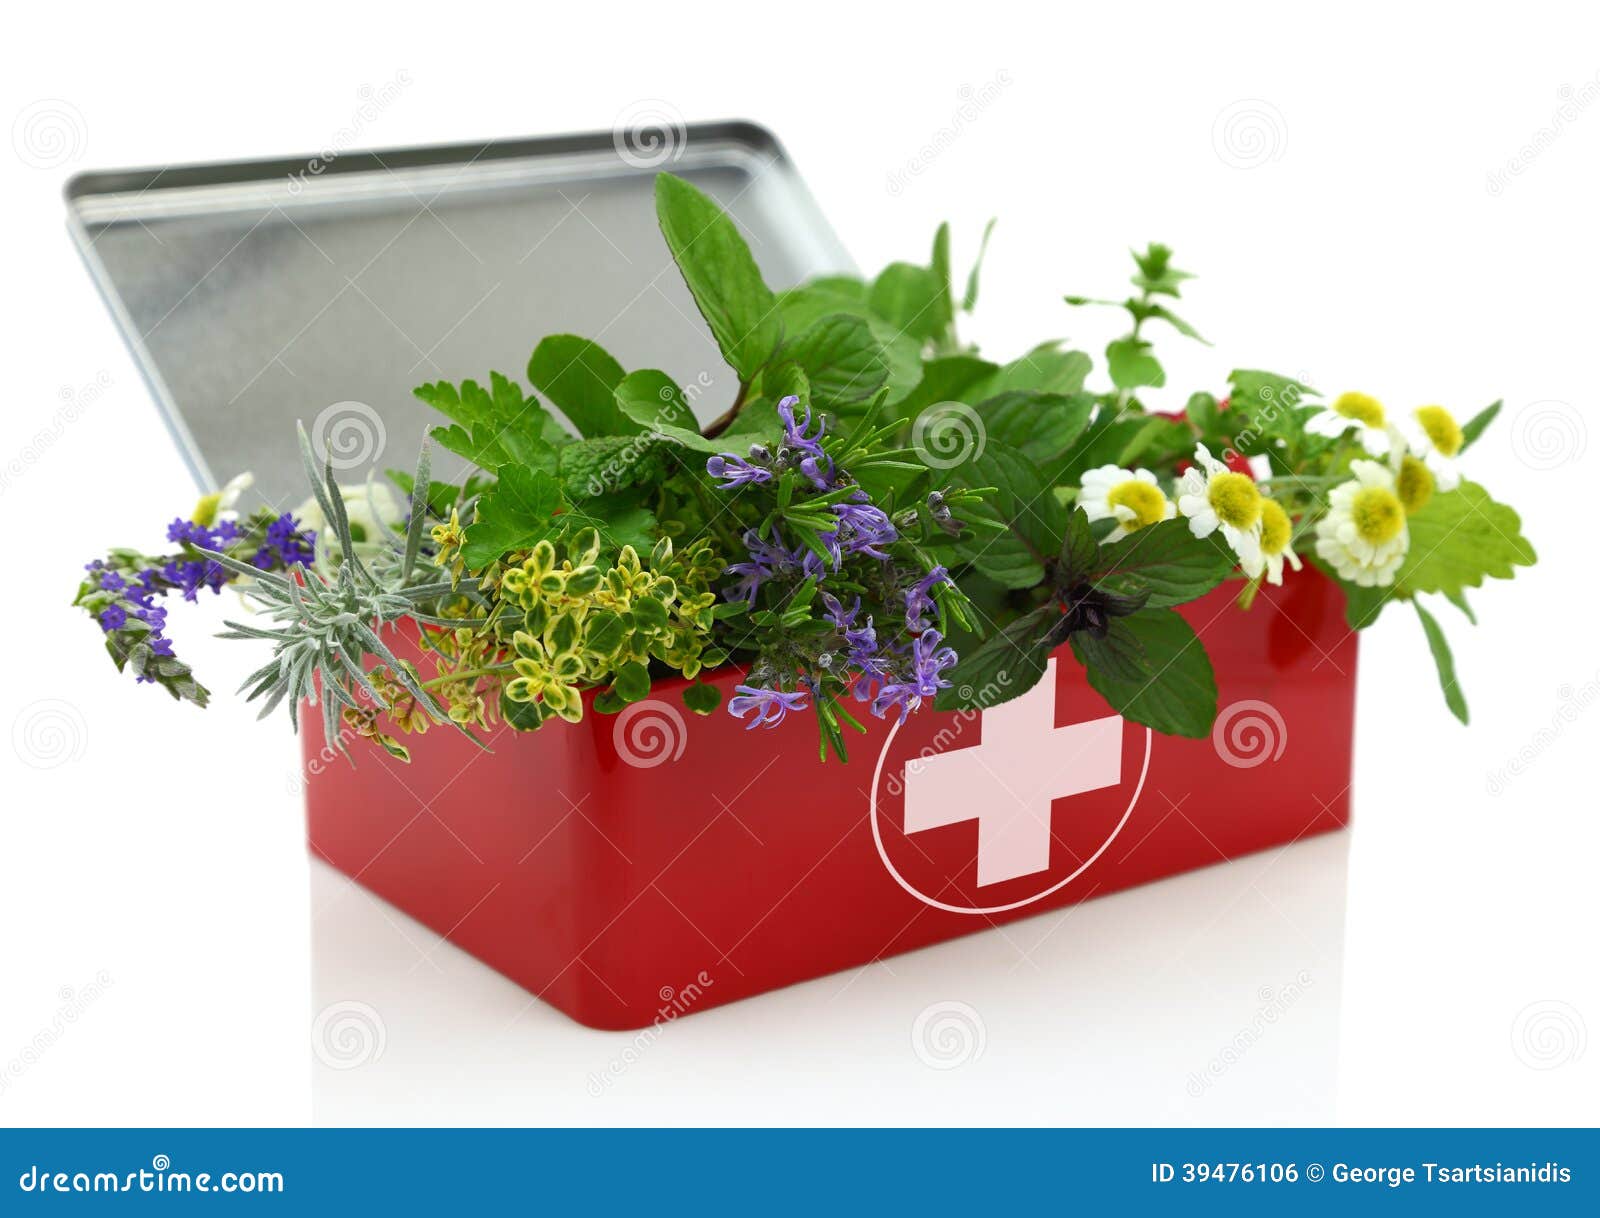 fresh herbs in first aid kit